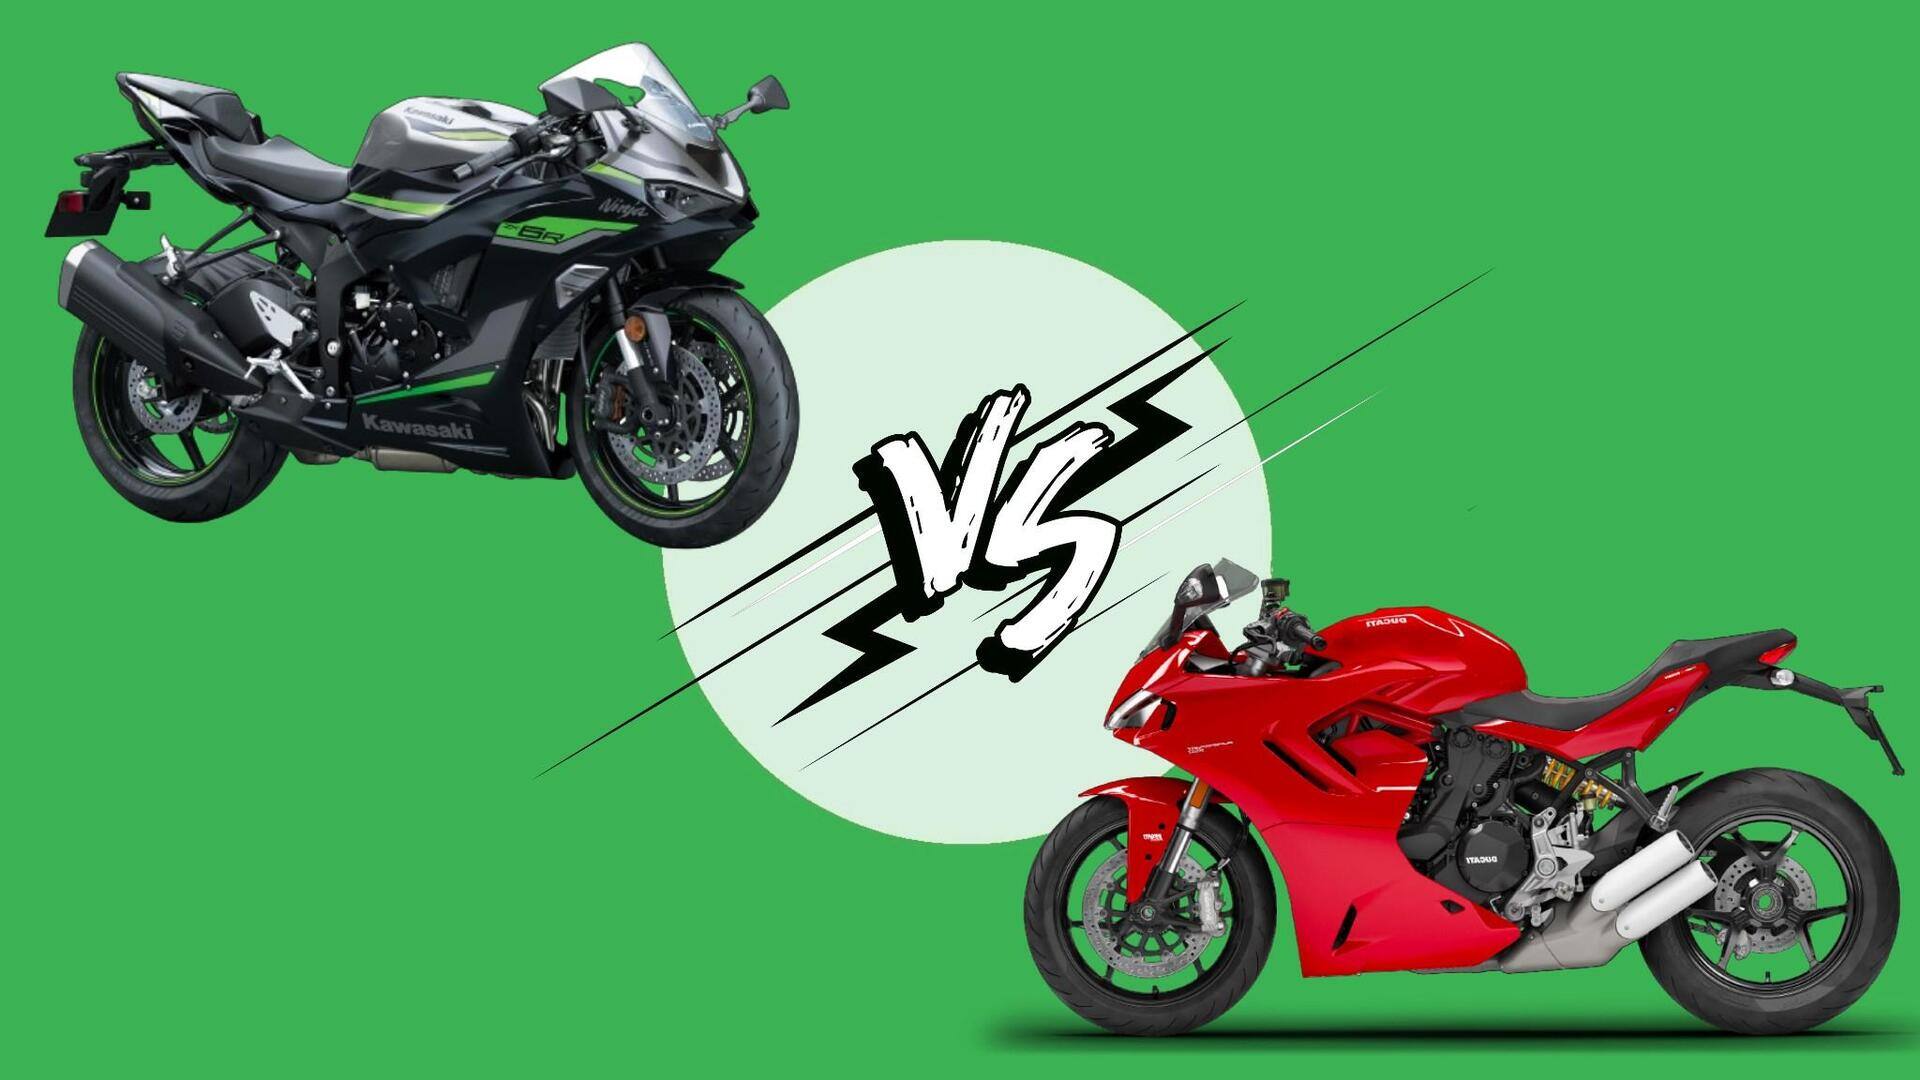 Kawasaki Ninja ZX-6R vs Ducati SuperSport 950: Which is better